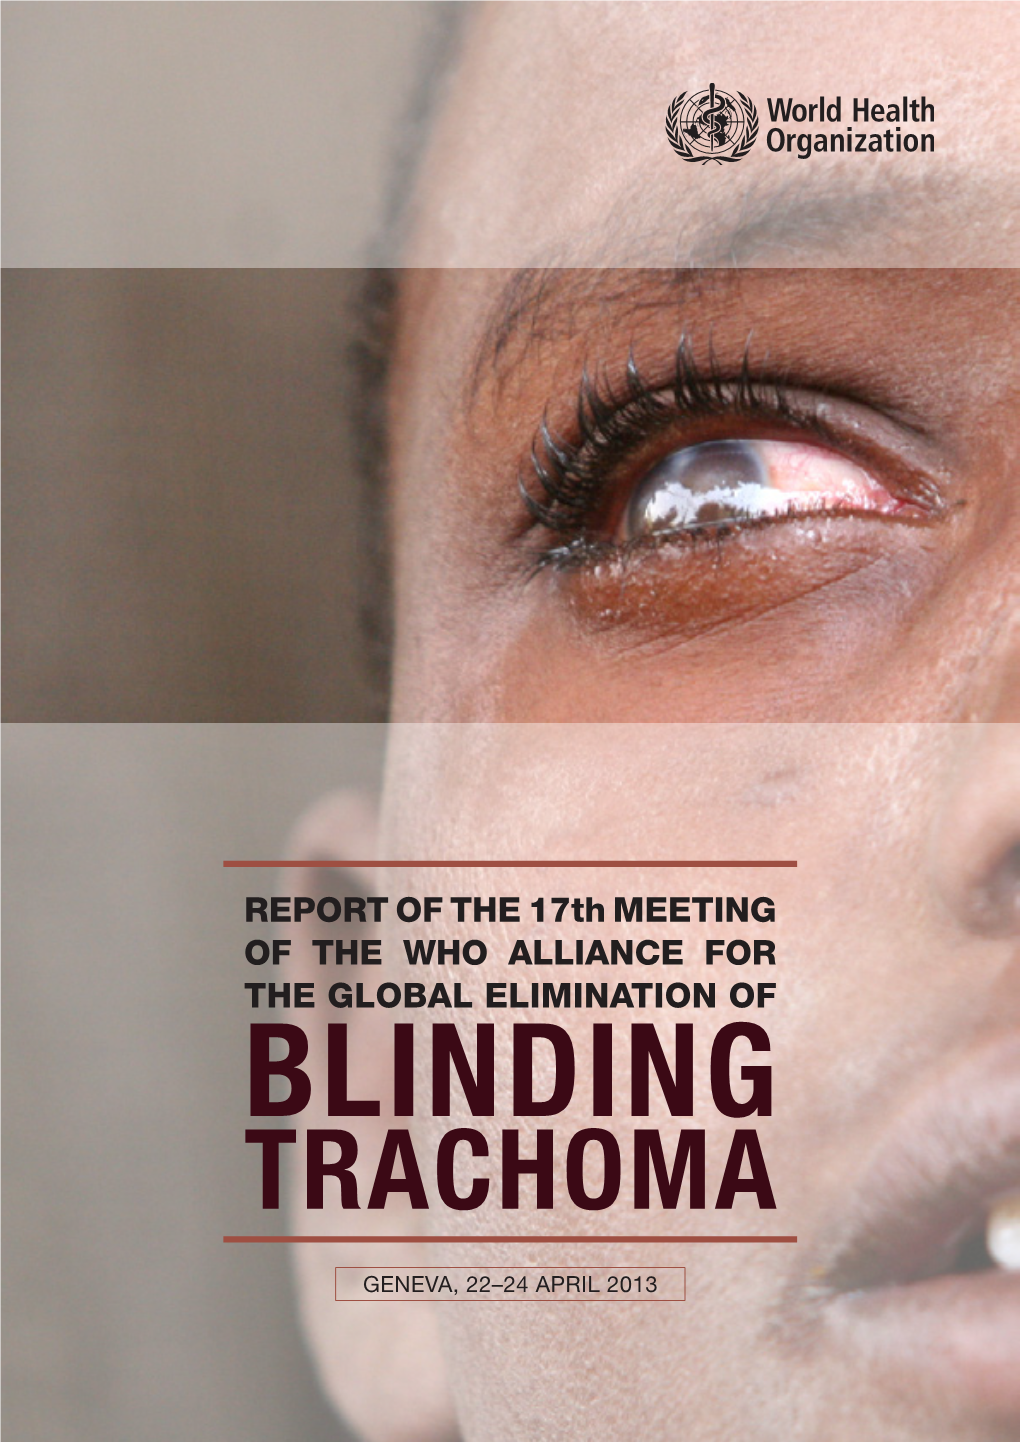 Blinding Trachoma